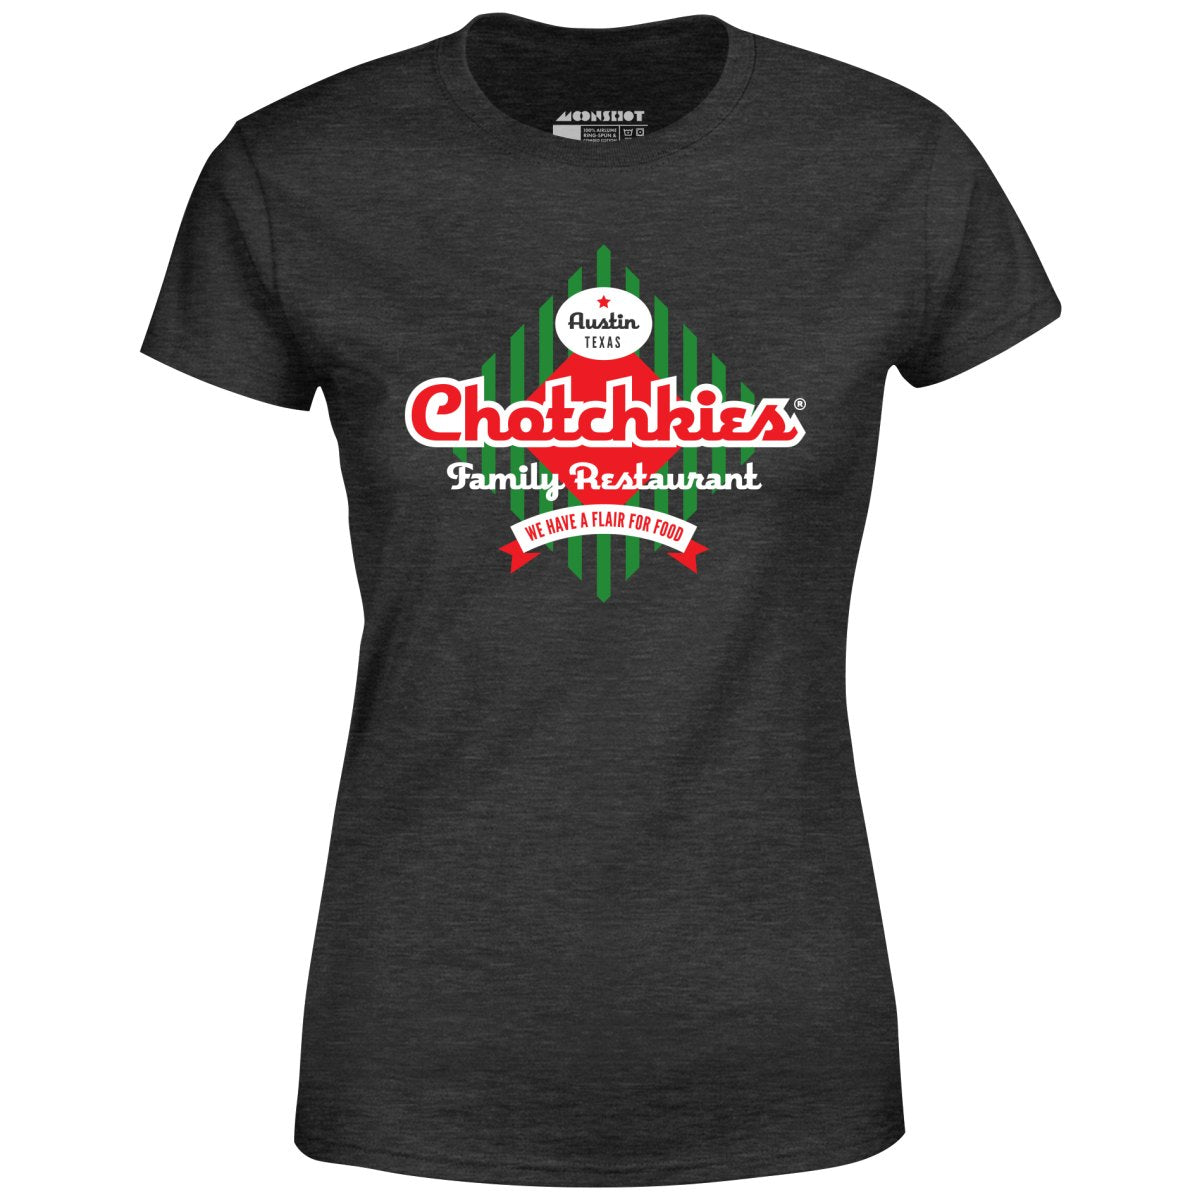 Chotchkie's Family Restaurant - Women's T-Shirt